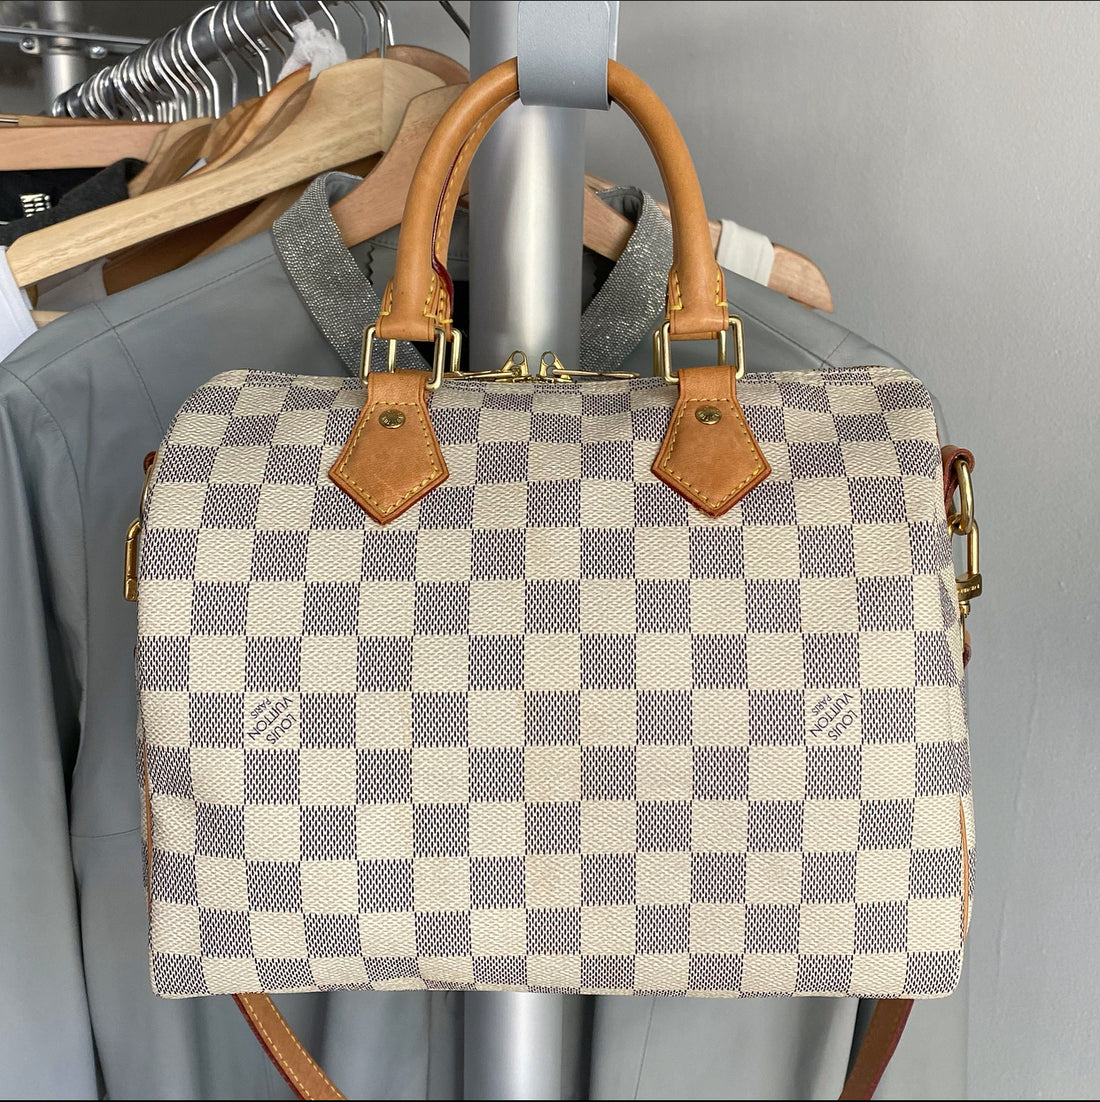 Louis Vuitton Damier Azur Speedy 25 Bandouliere Bag – I MISS YOU